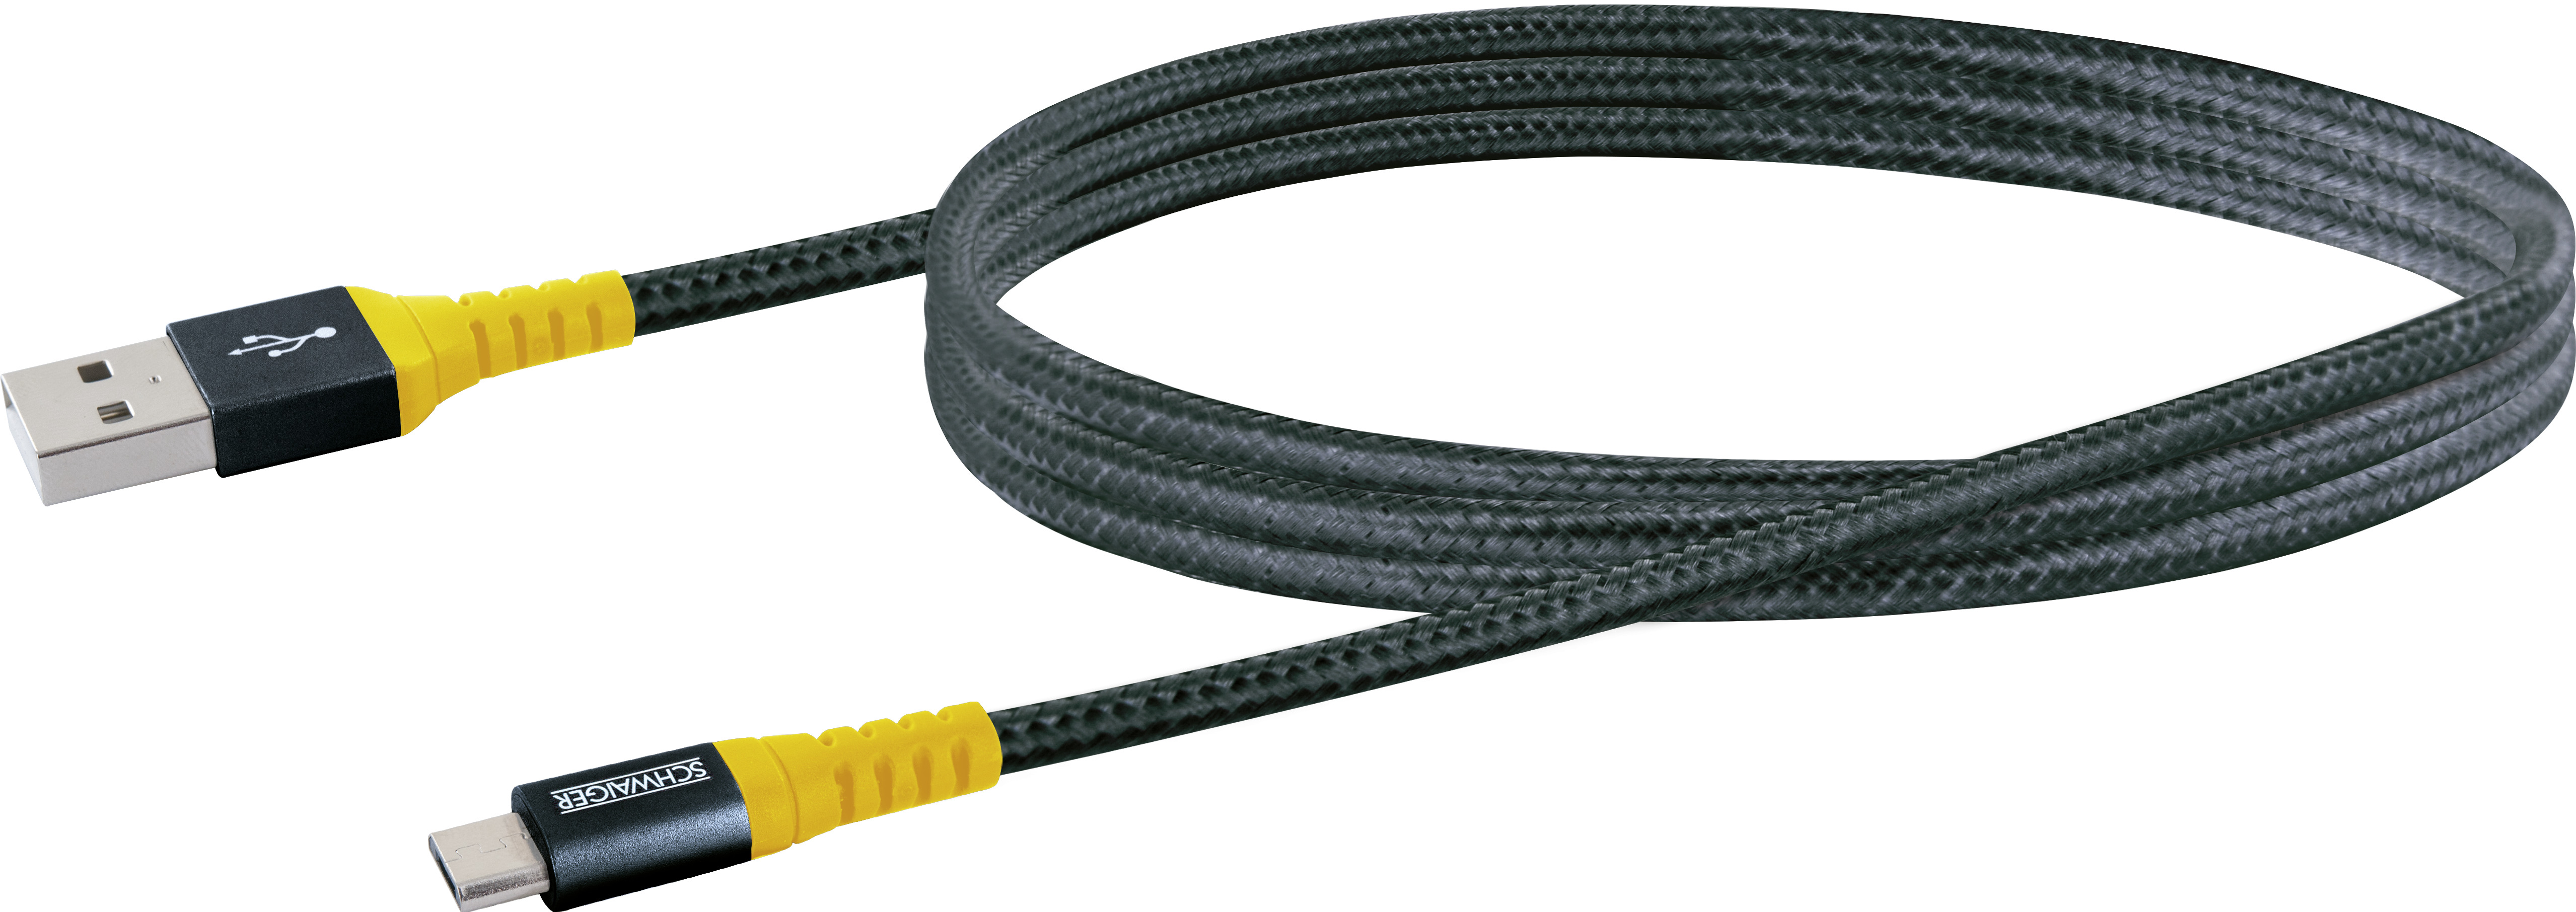 CONNECT Micro USB Sync& Lade Kabel 1.2m schwarz/gelb